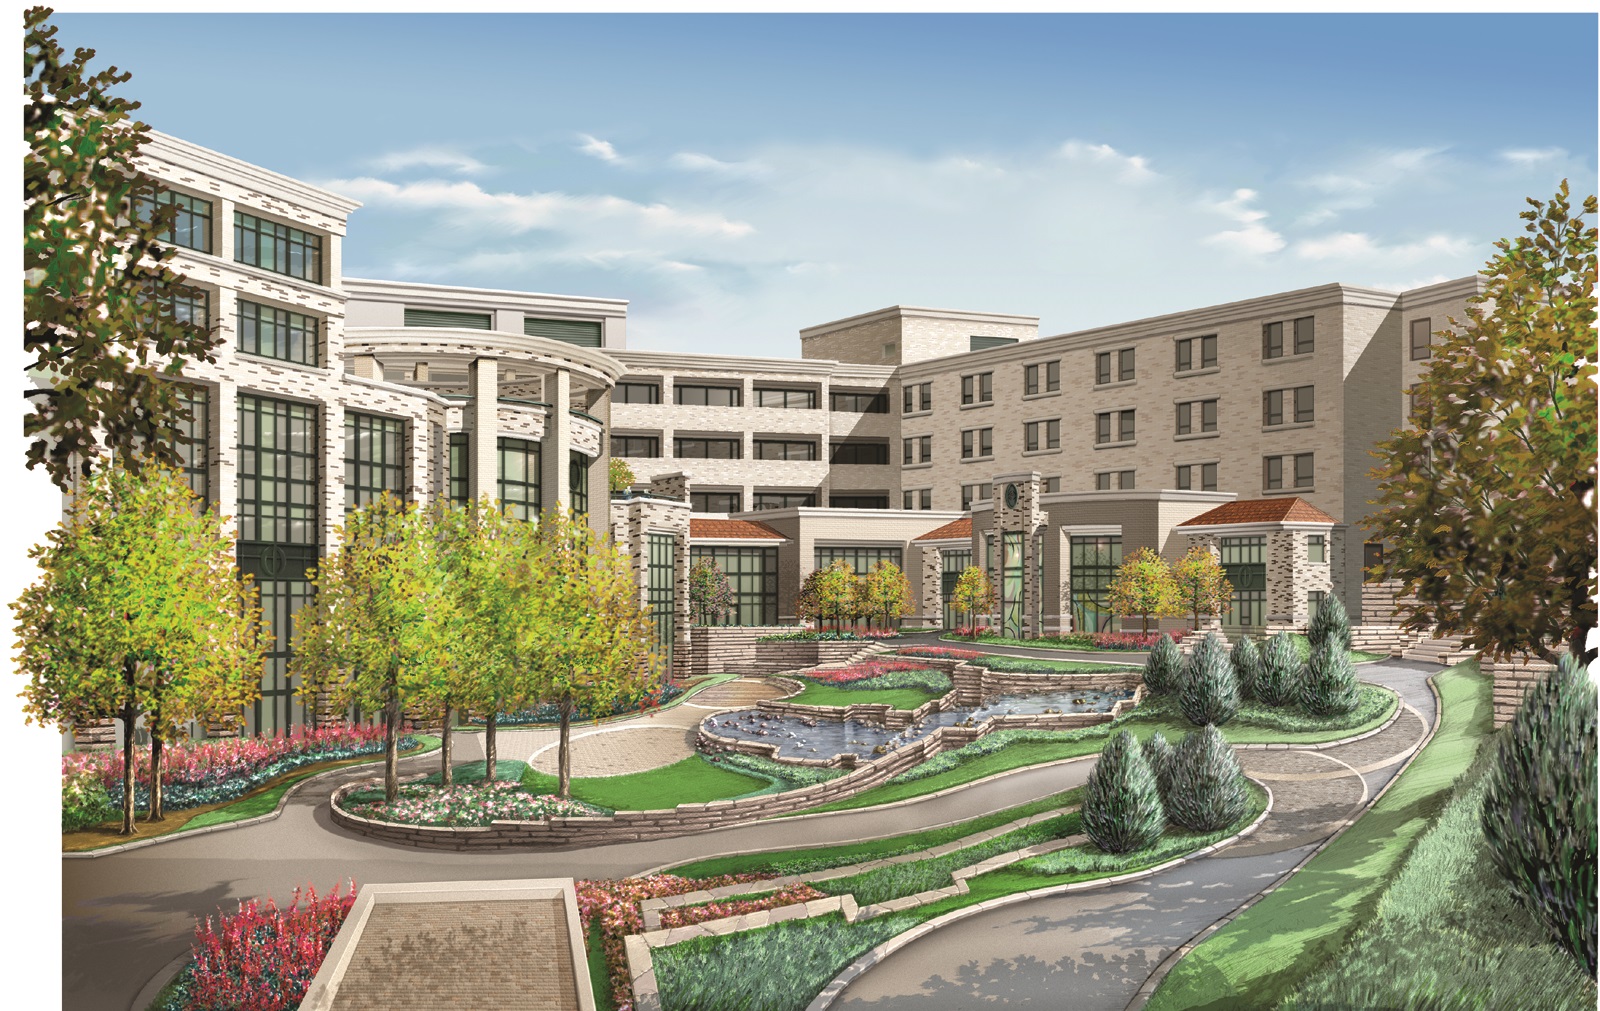 Central DuPage Hospital - Courtyard.jpg